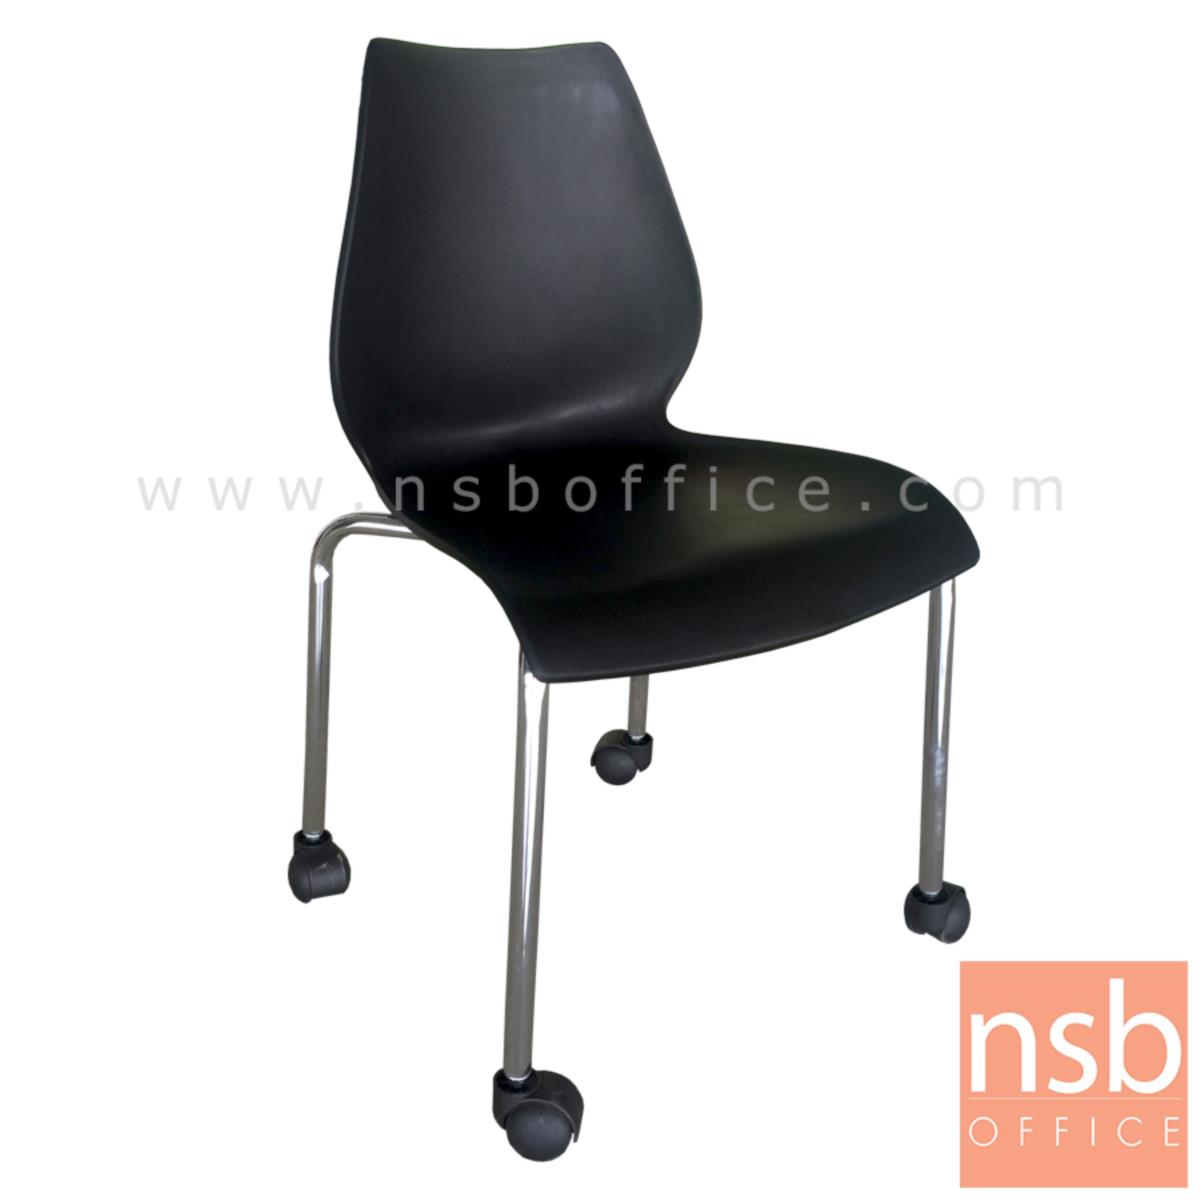 B29A055:เก้าอี้อเนกประสงค์เฟรมโพลี่ รุ่น Swizzle (สวิซเซิล)  ขาเหล็กชุบโครเมี่ยม ล้อเลื่อน